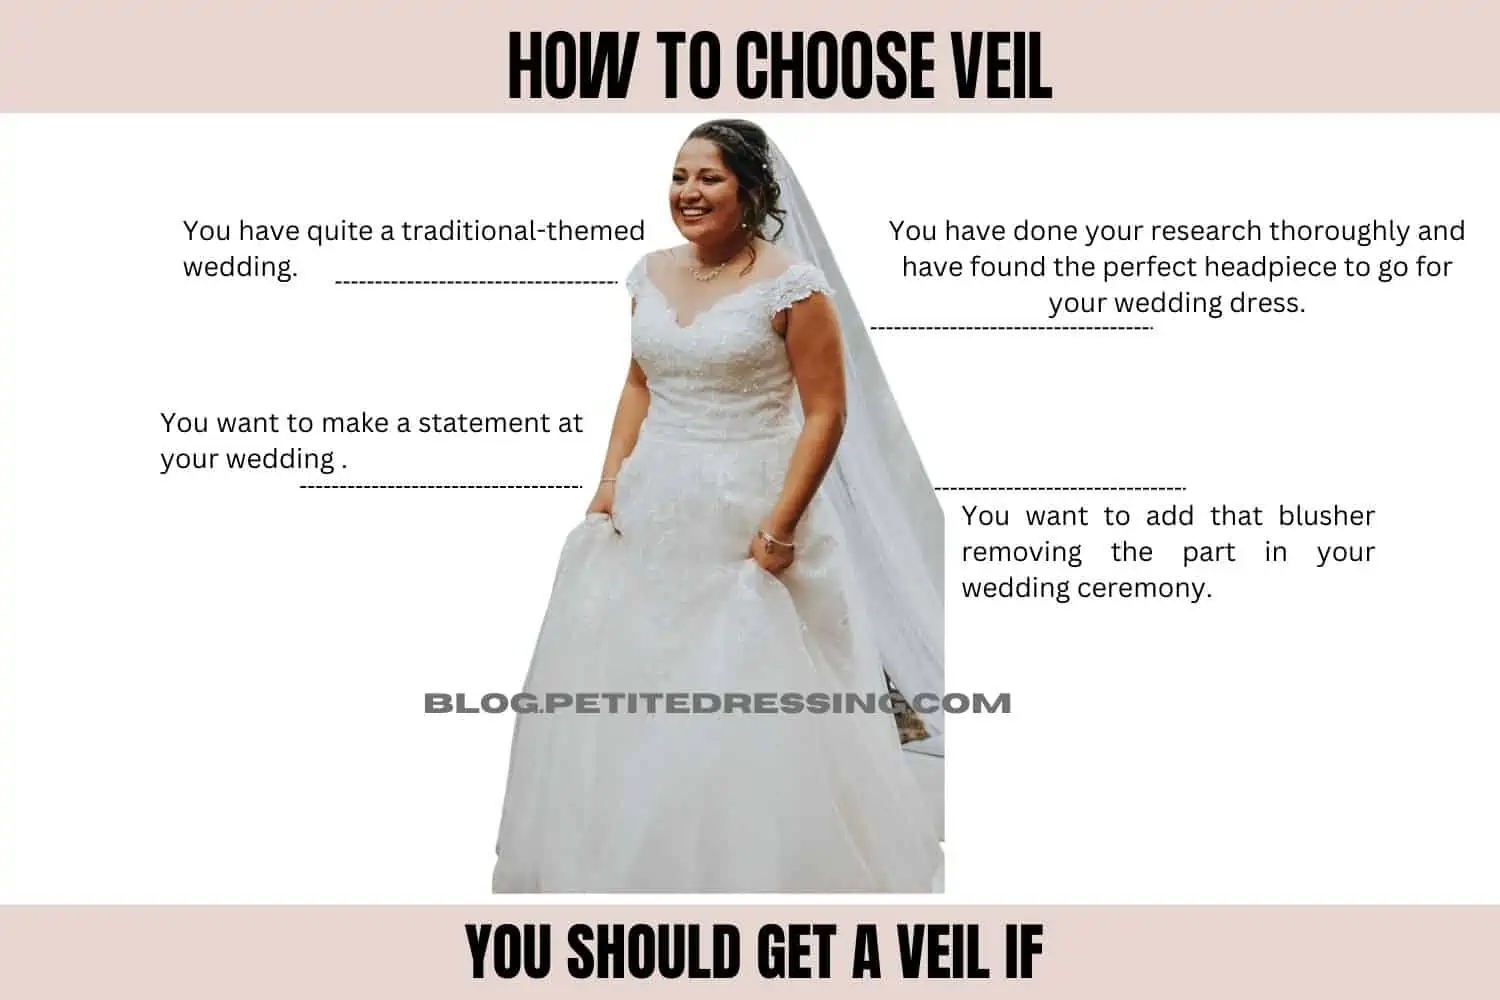 https://blog.petitedressing.com/wp-content/uploads/2019/03/wedding-You-should-get-a-veil-if-.webp